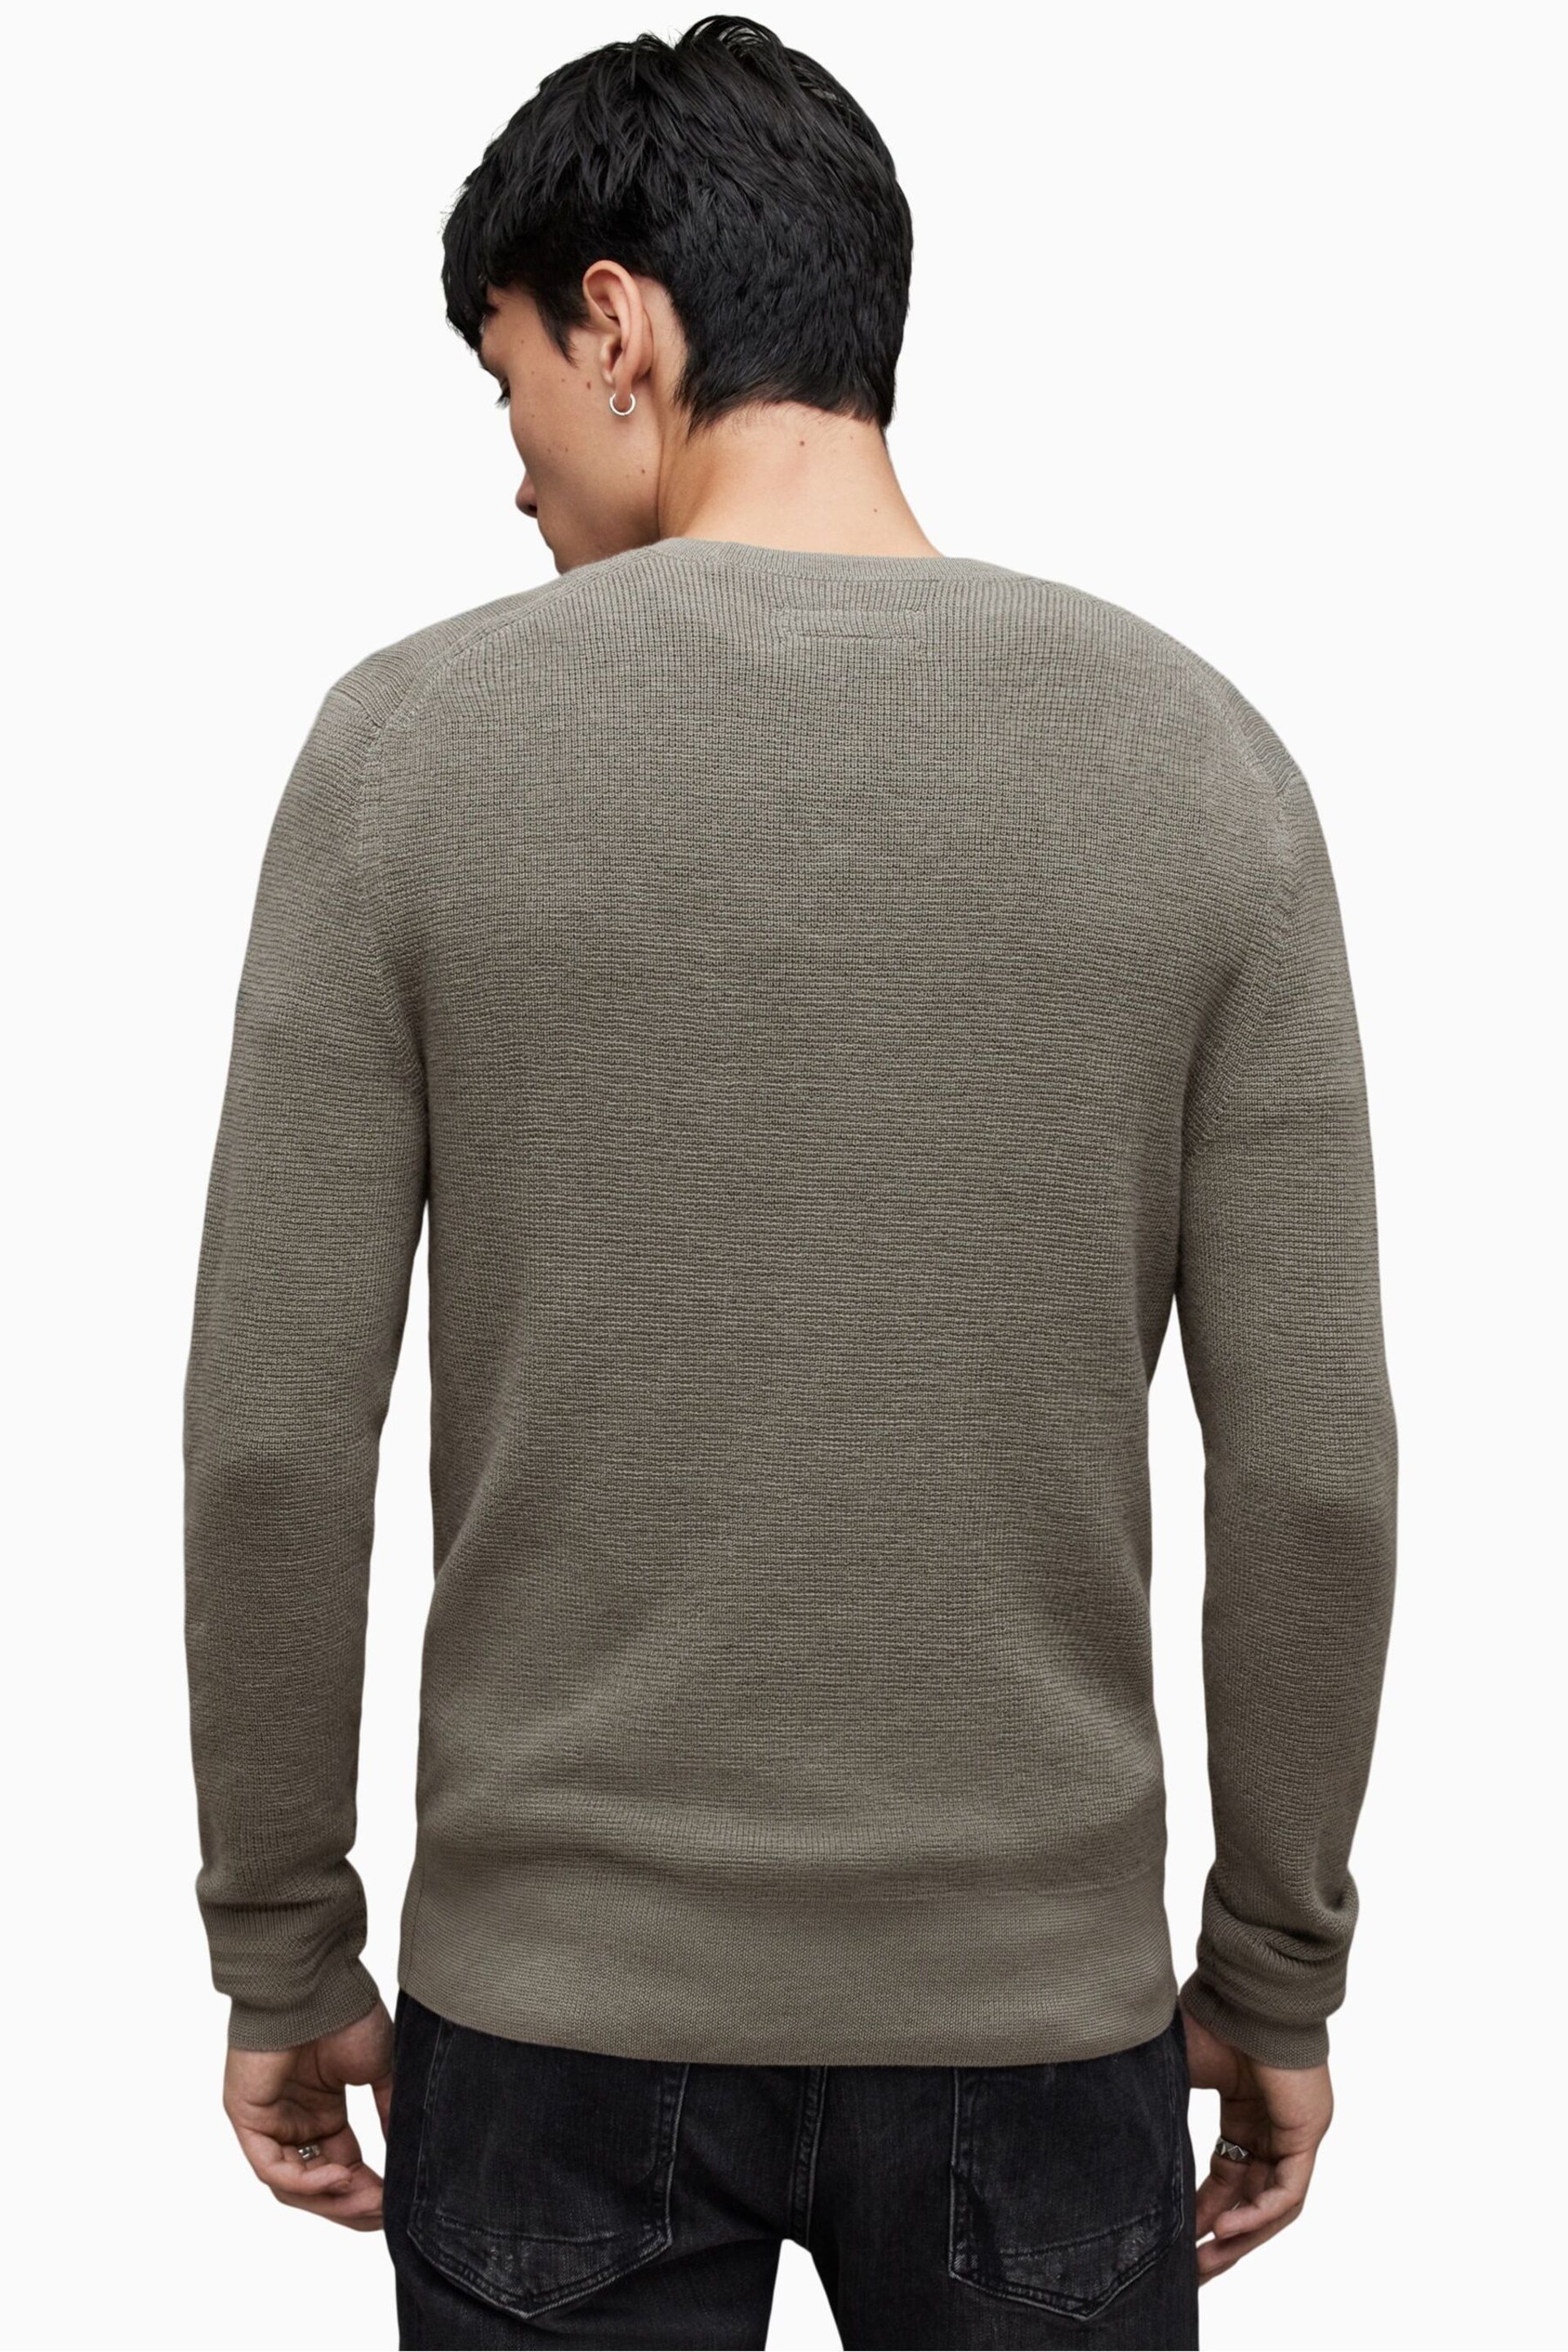 AllSaints Grey Ivar Merino Crew Neck Sweater - Image 2 of 7